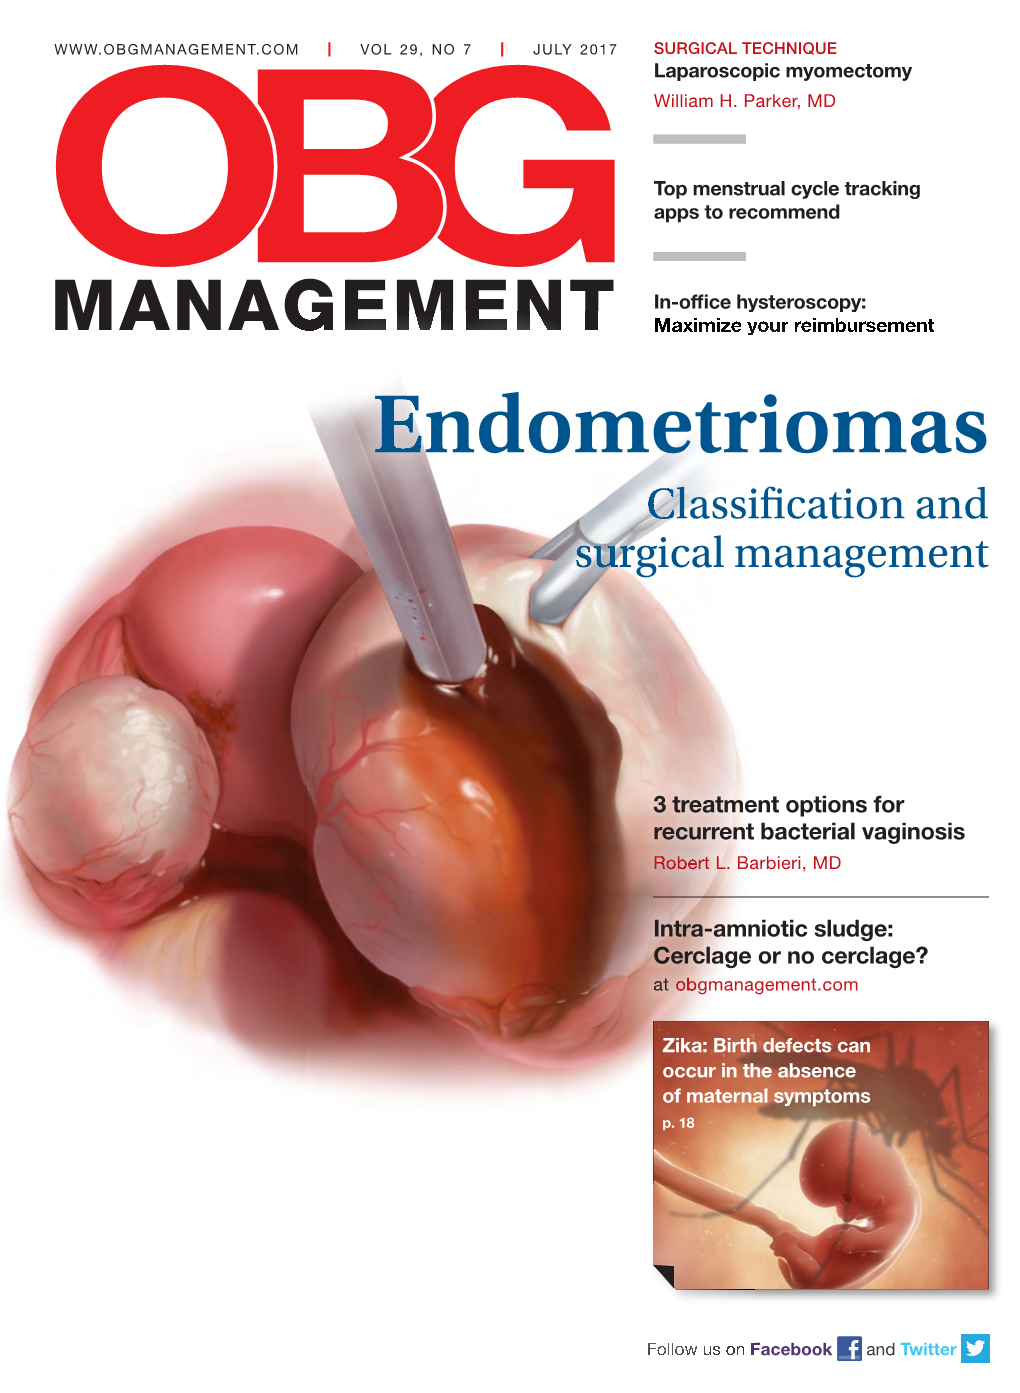 Endometriomasendometriomas Classificlassifi Catcationion a Nandd Surgicalsurgical Mamanagementnagement